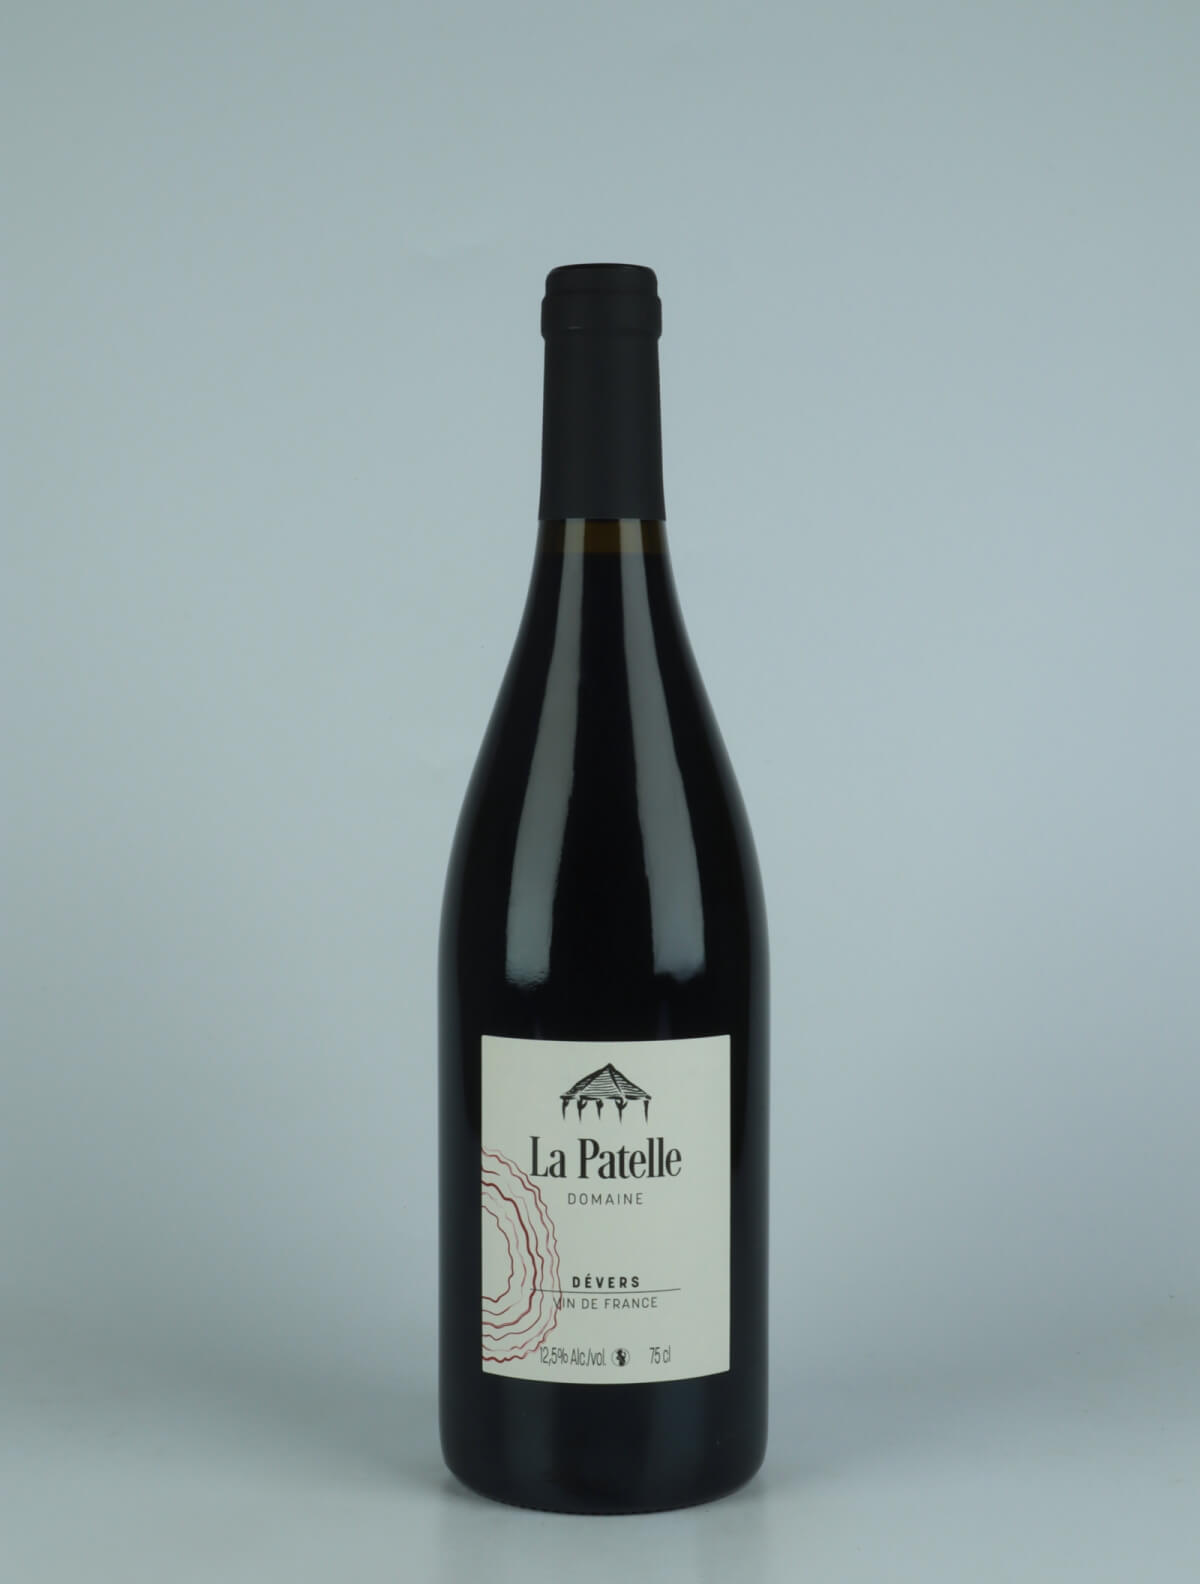 En flaske 2022 Dévers - Pinot Noir Rødvin fra Domaine de La Patelle, Jura i Frankrig